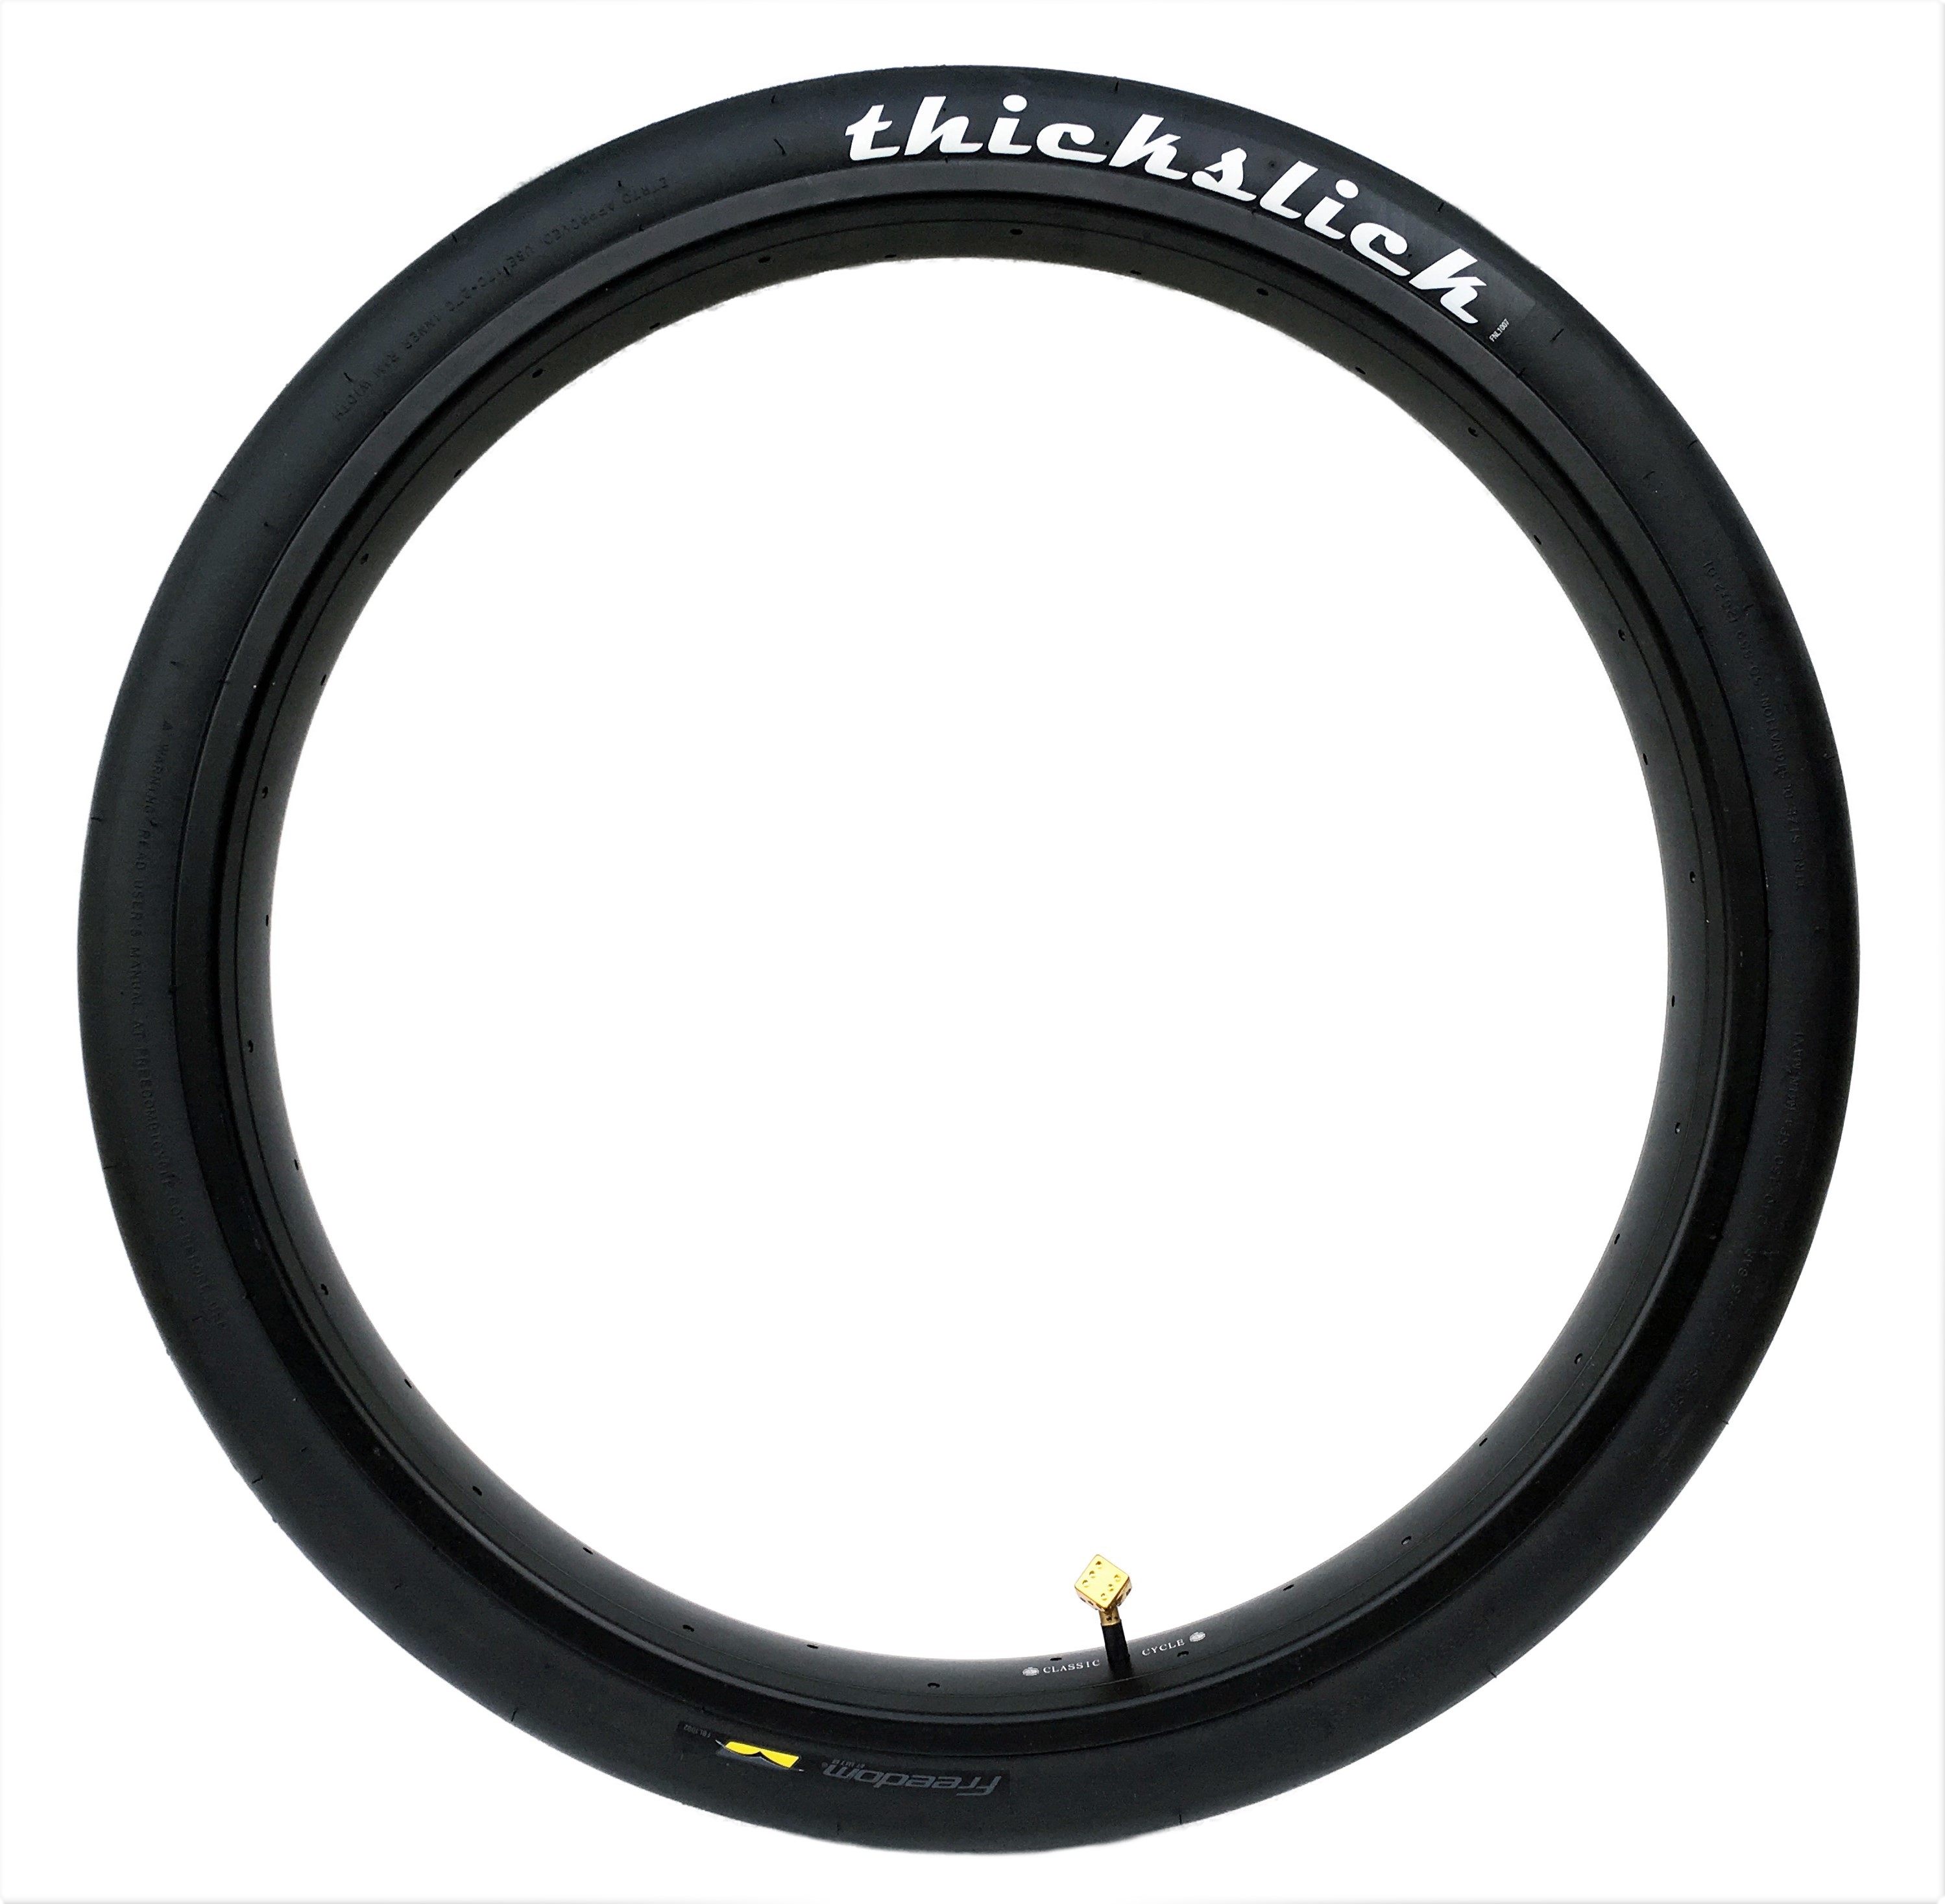 Tire thickslick 26 x 2.0 black